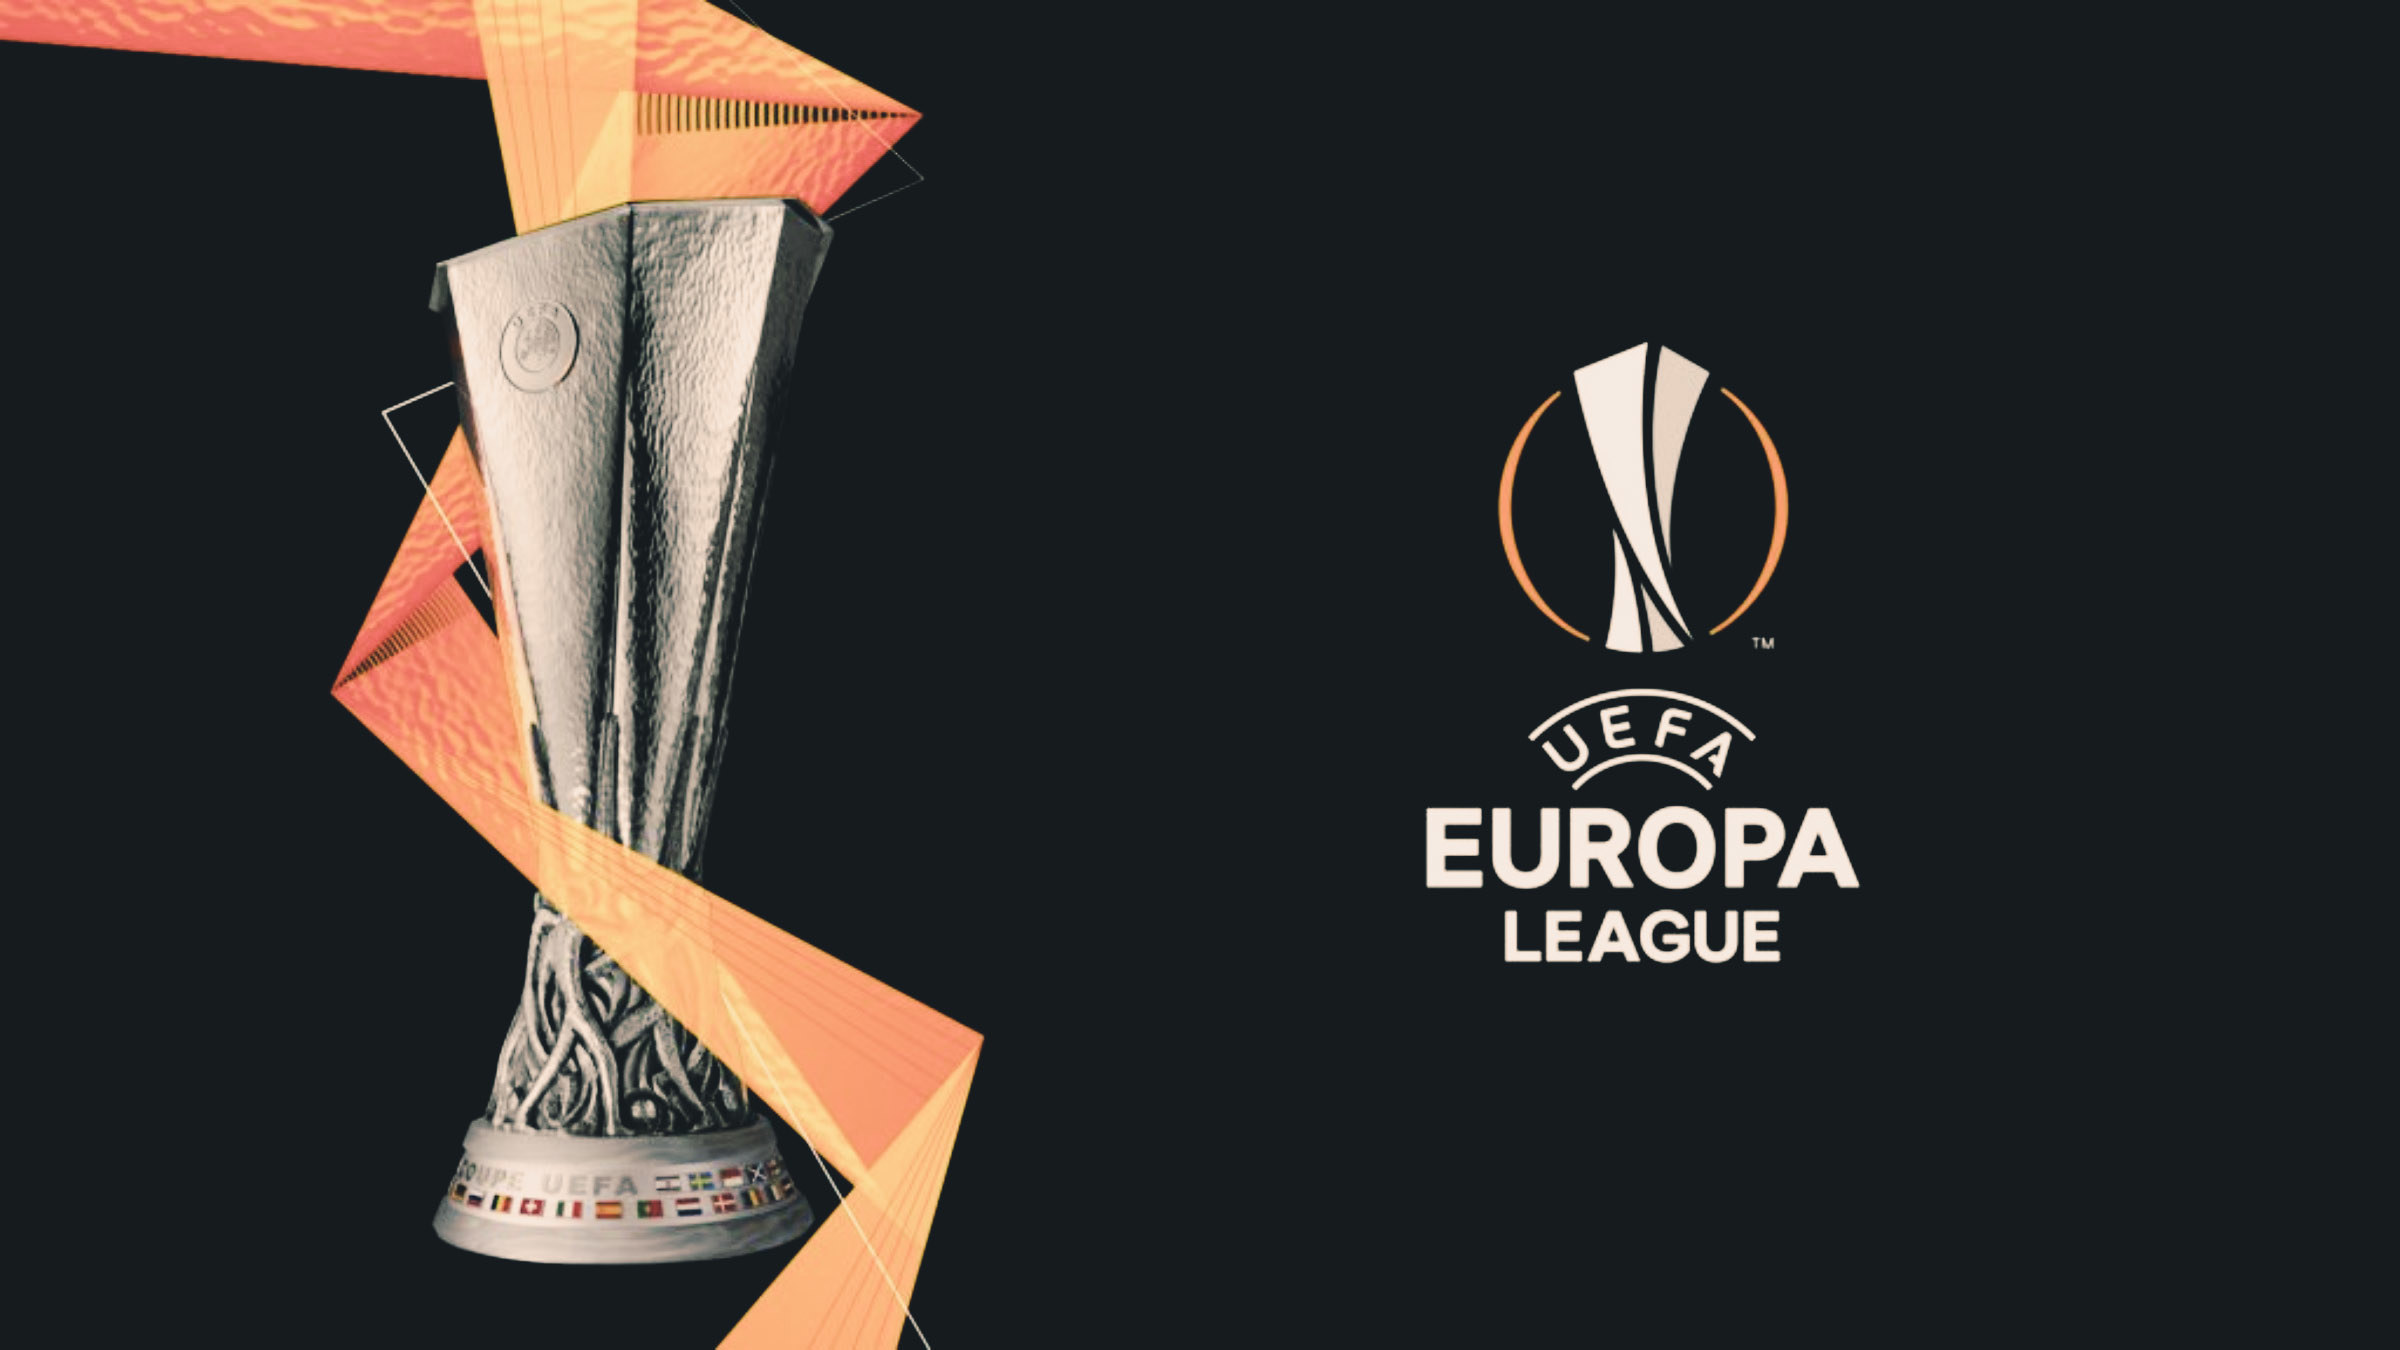 Лига кубок уефа. UEFA Europa League 2022. UEFA Europa League 2021. Лига Европы УЕФА эмблема. UEFA Europa League логотип.